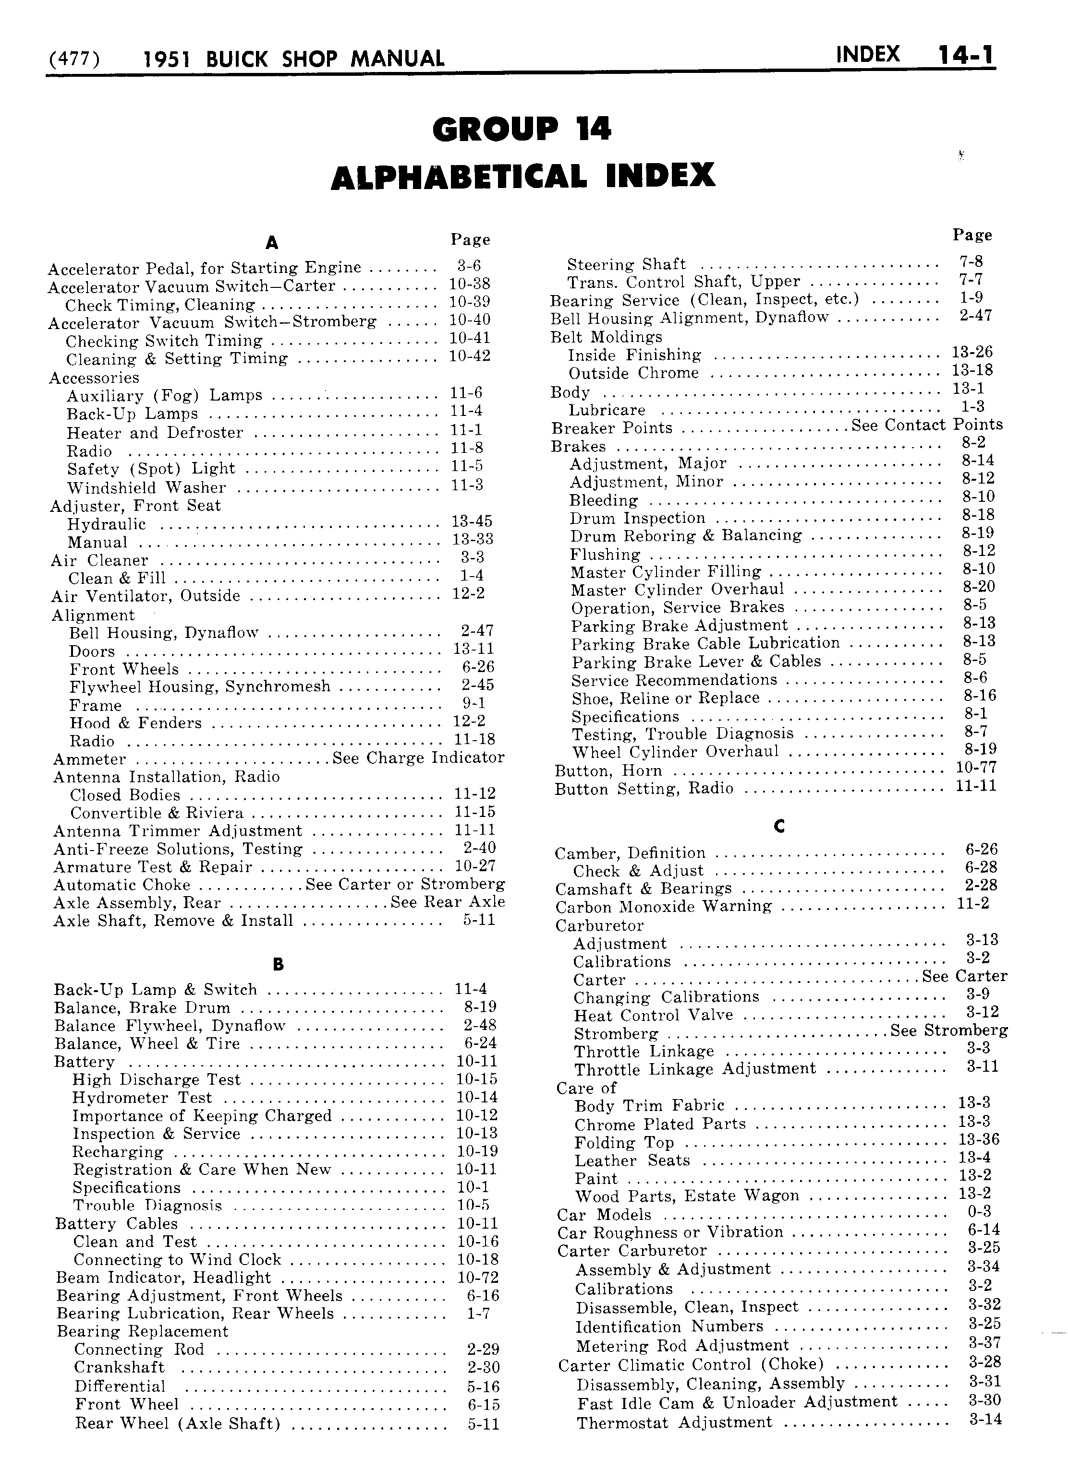 n_15 1951 Buick Shop Manual - Index-001-001.jpg